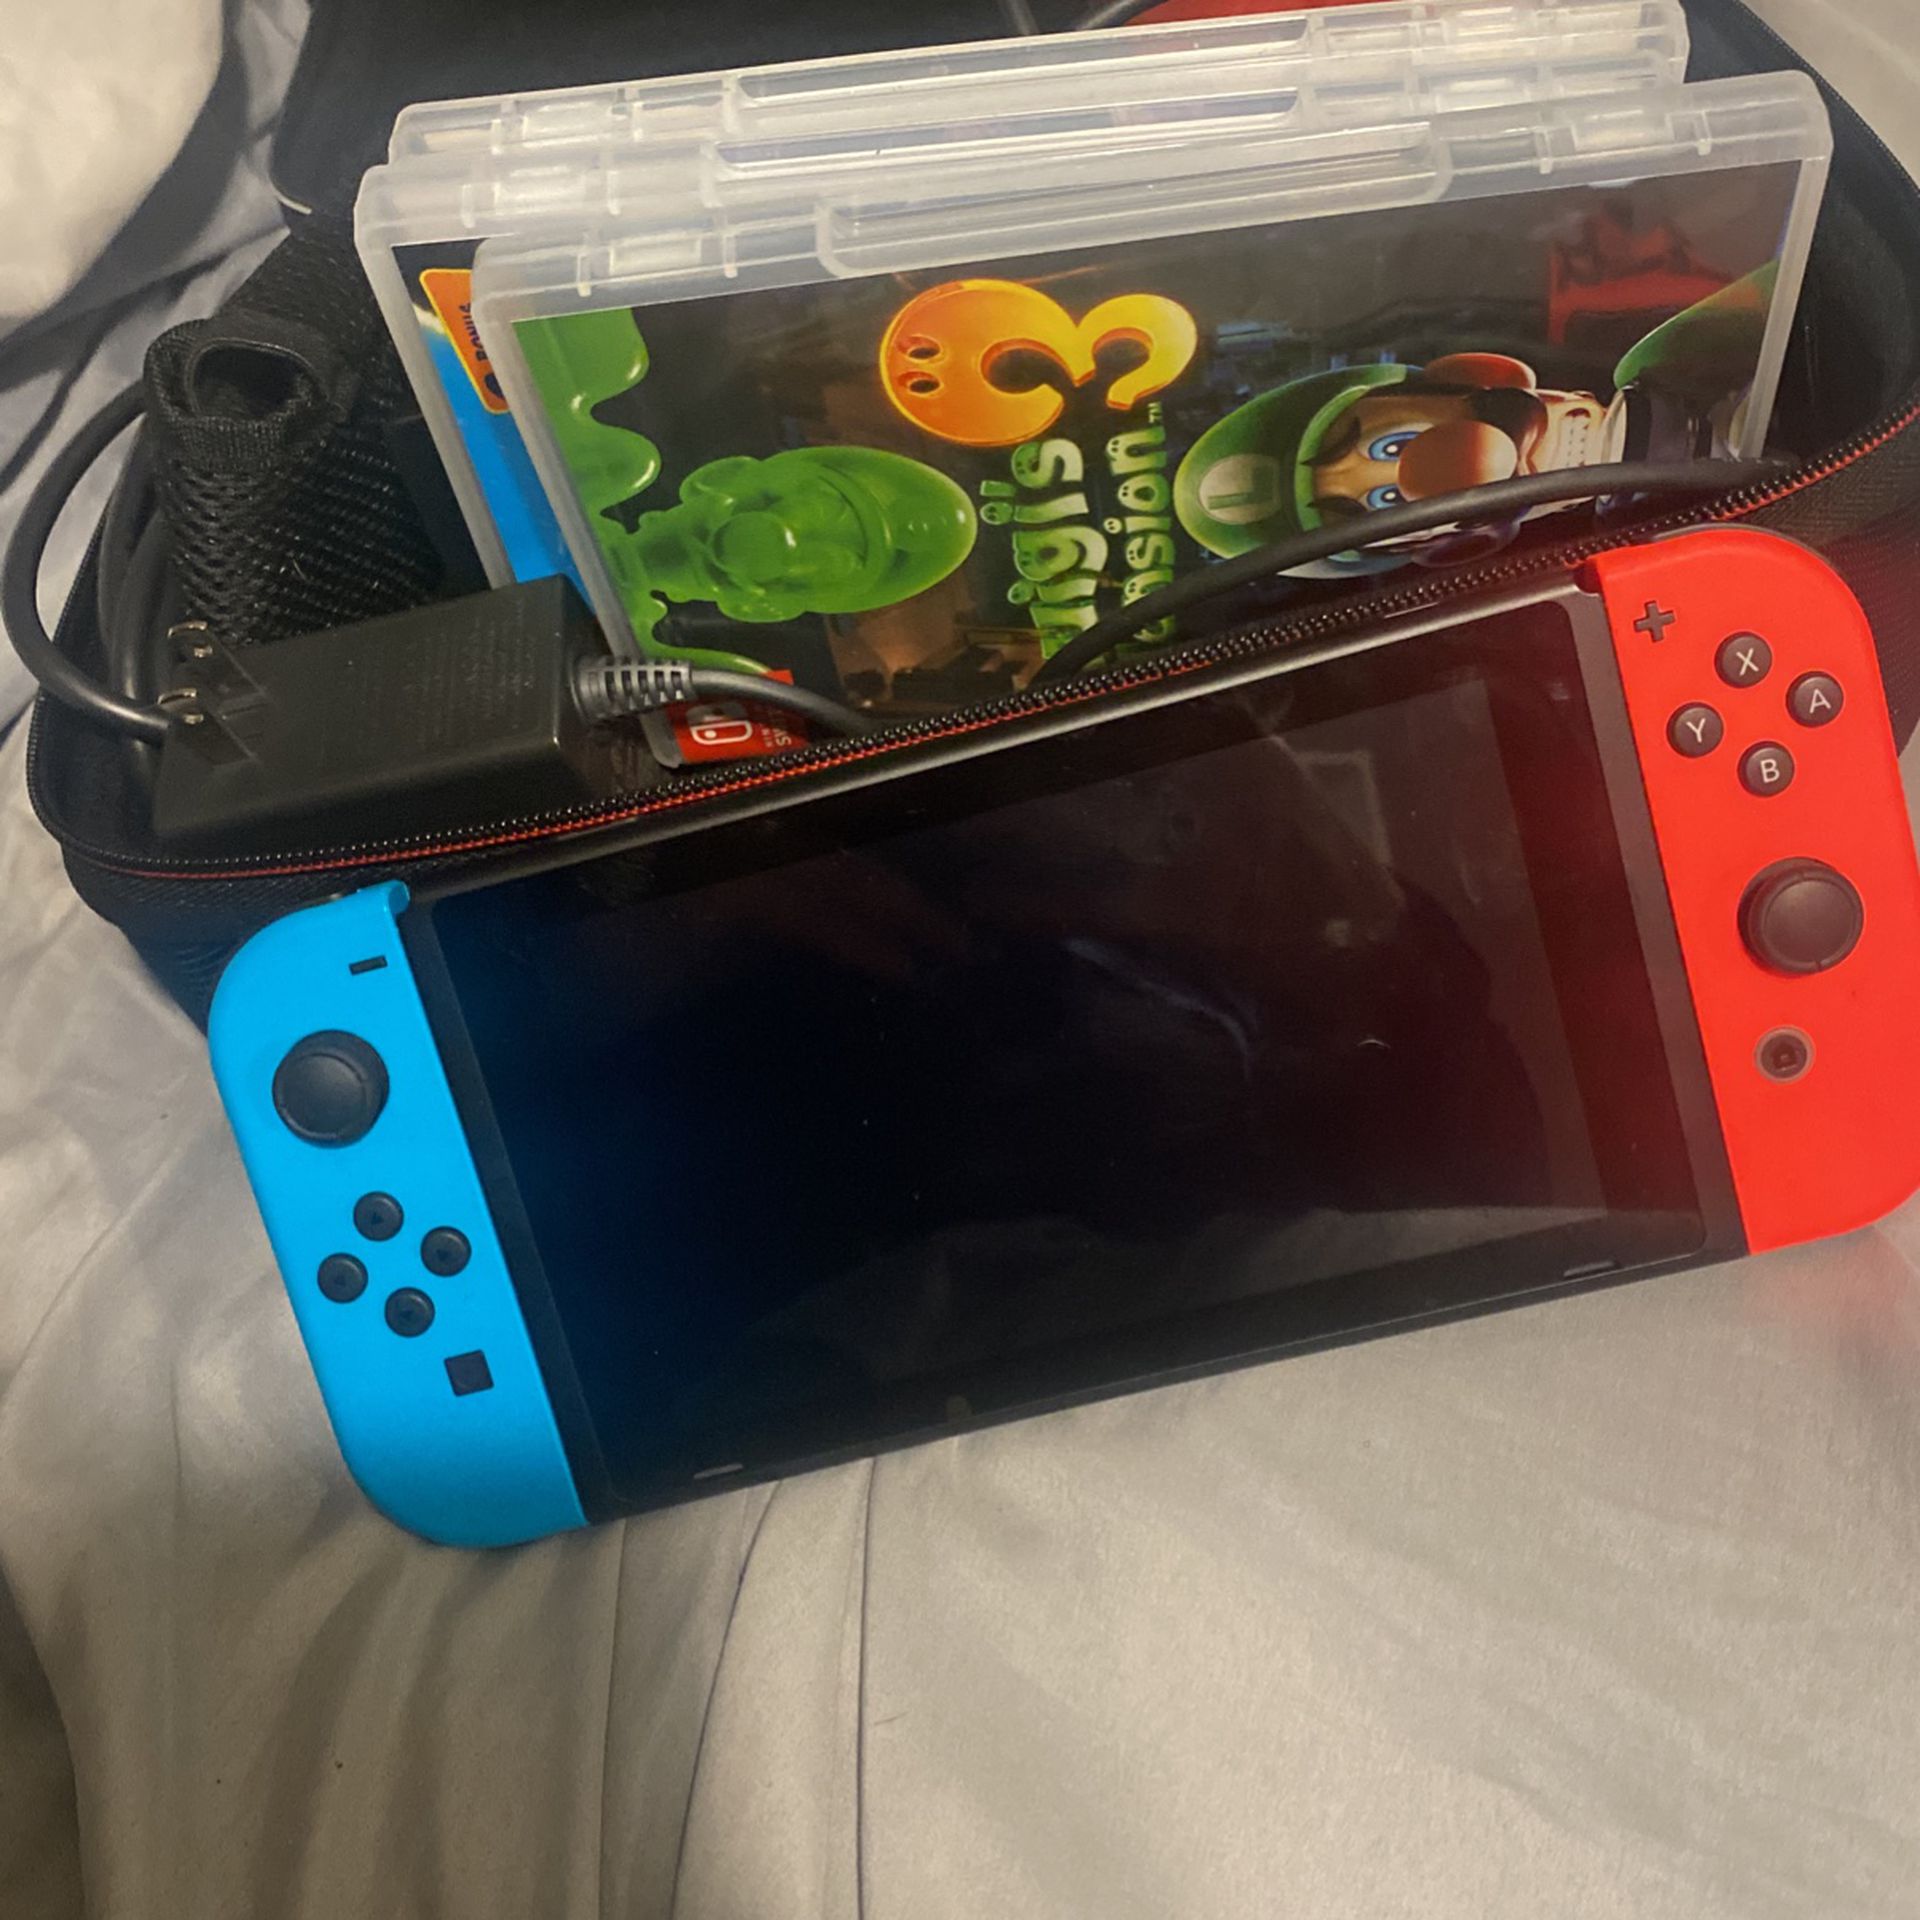 Selling My Nintendo switch